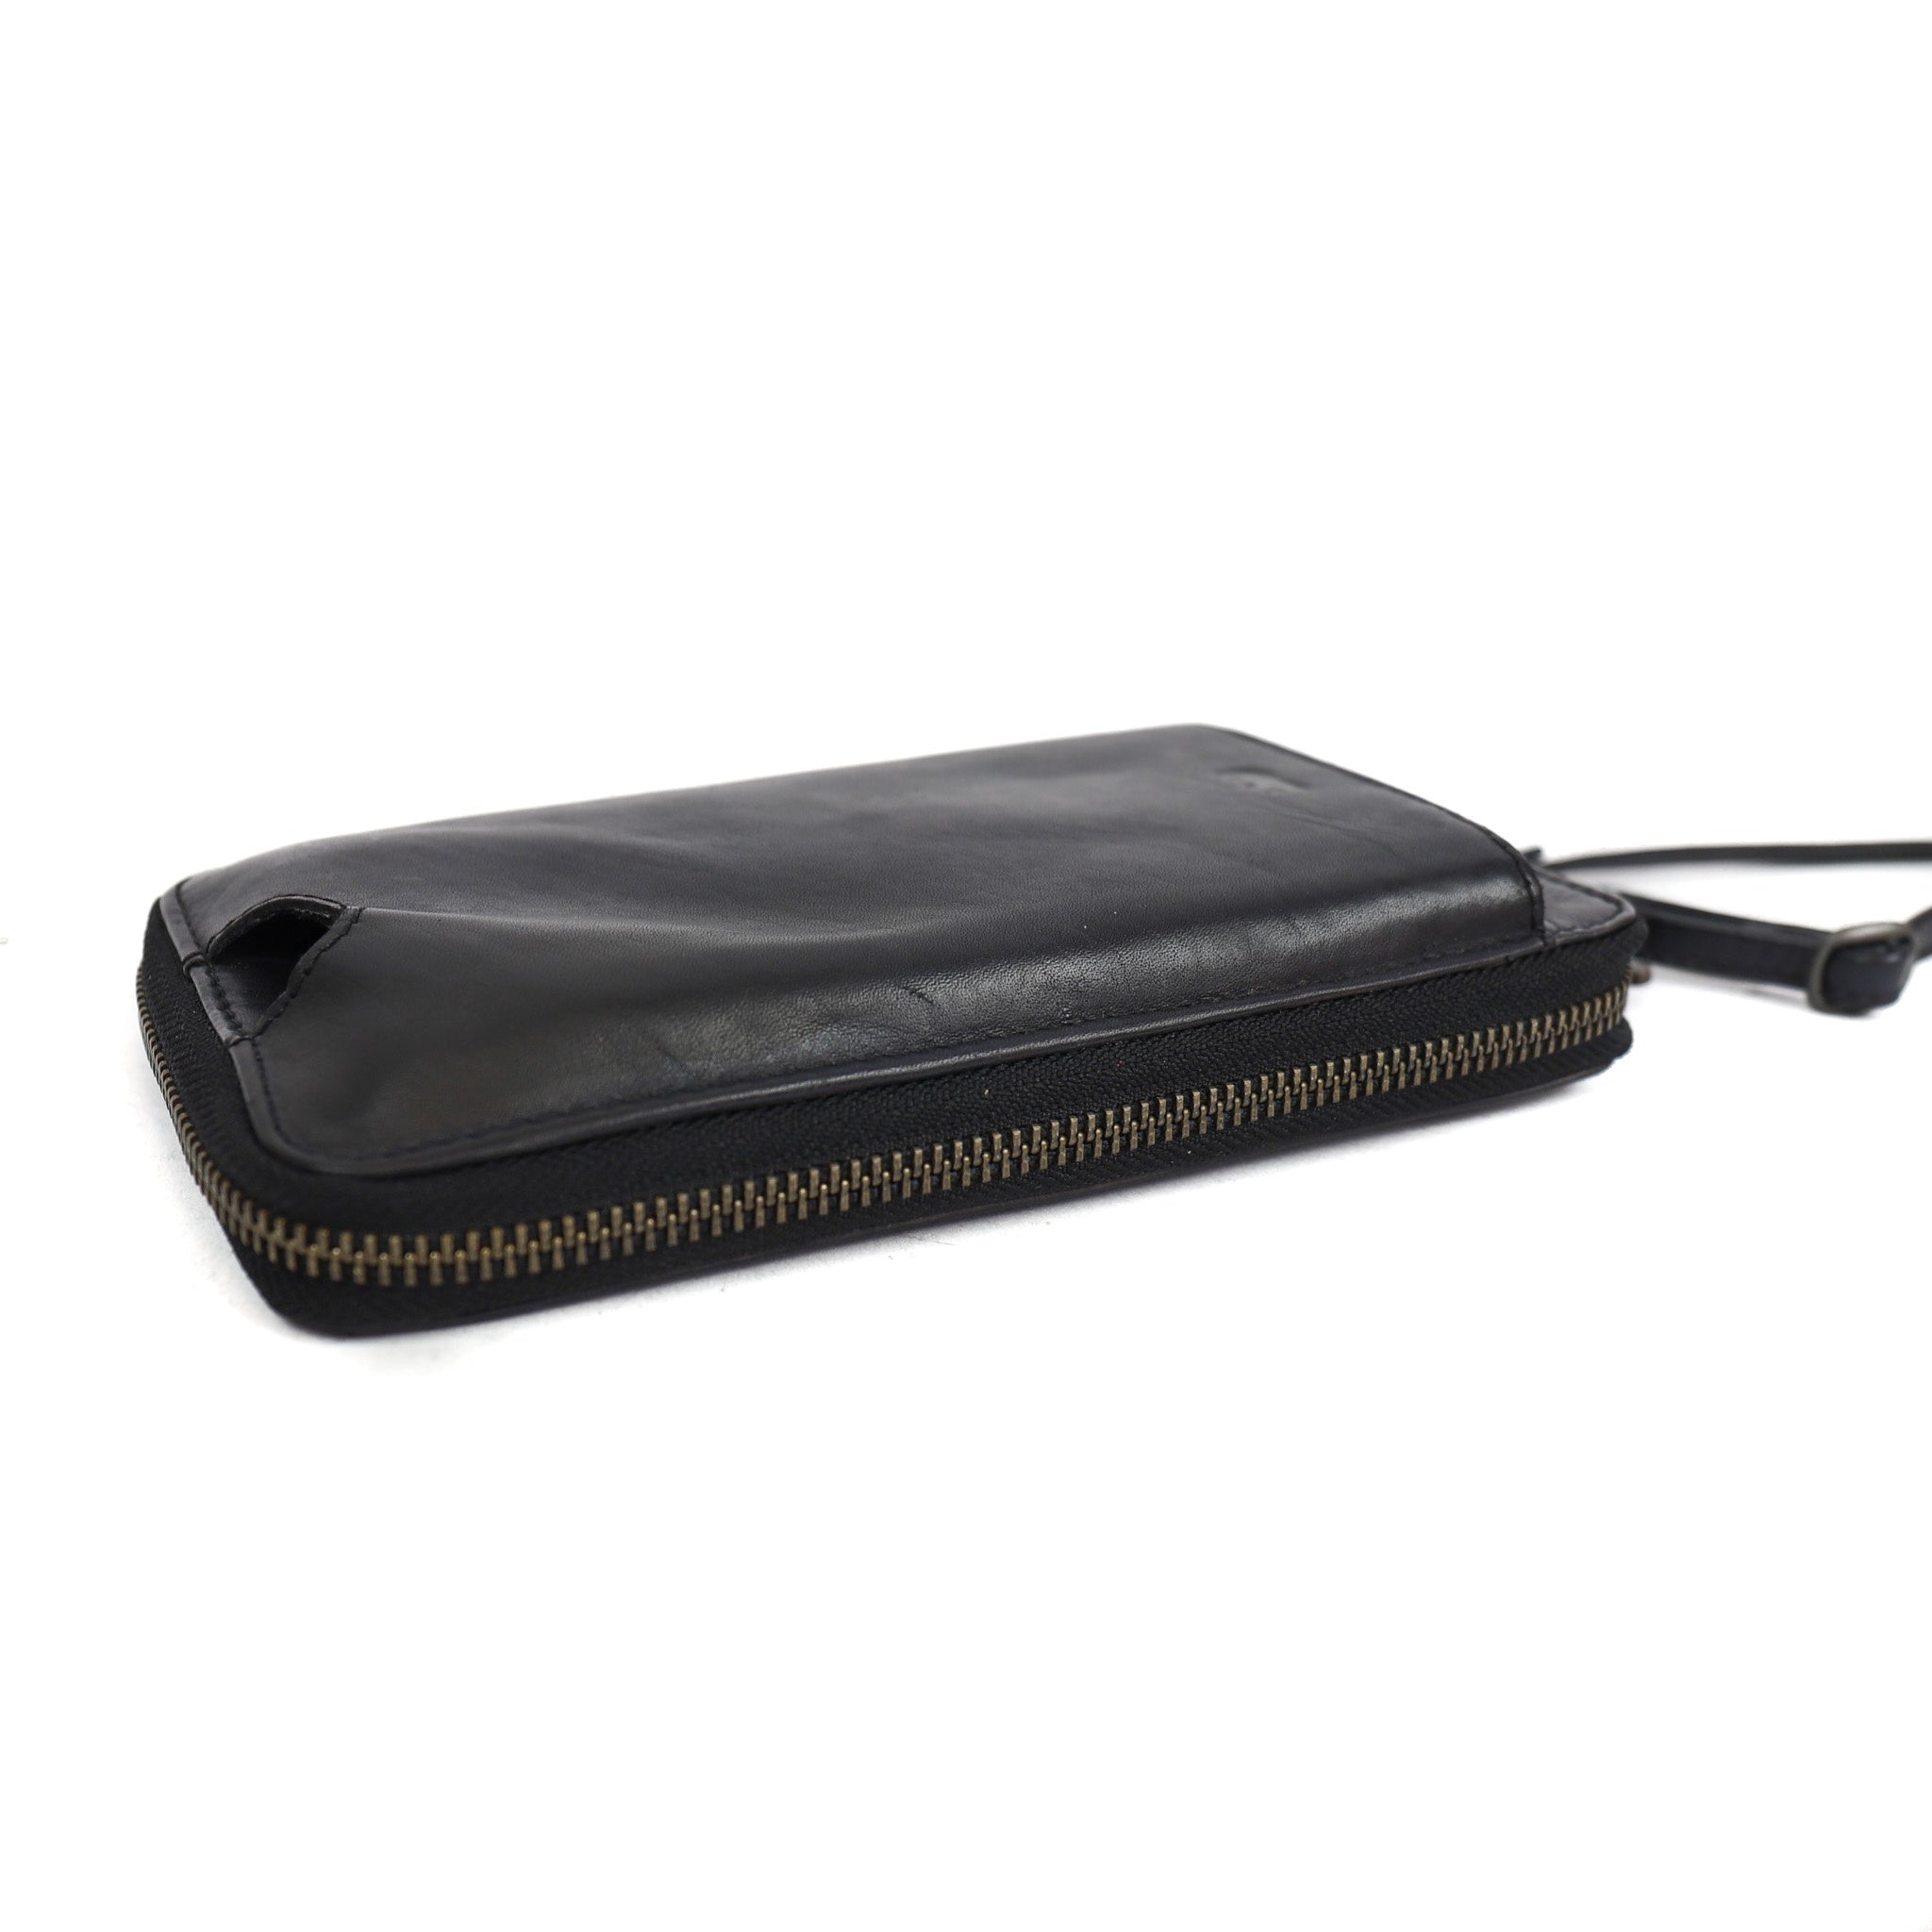 Phone bag 'Anniek' black - CL 18860